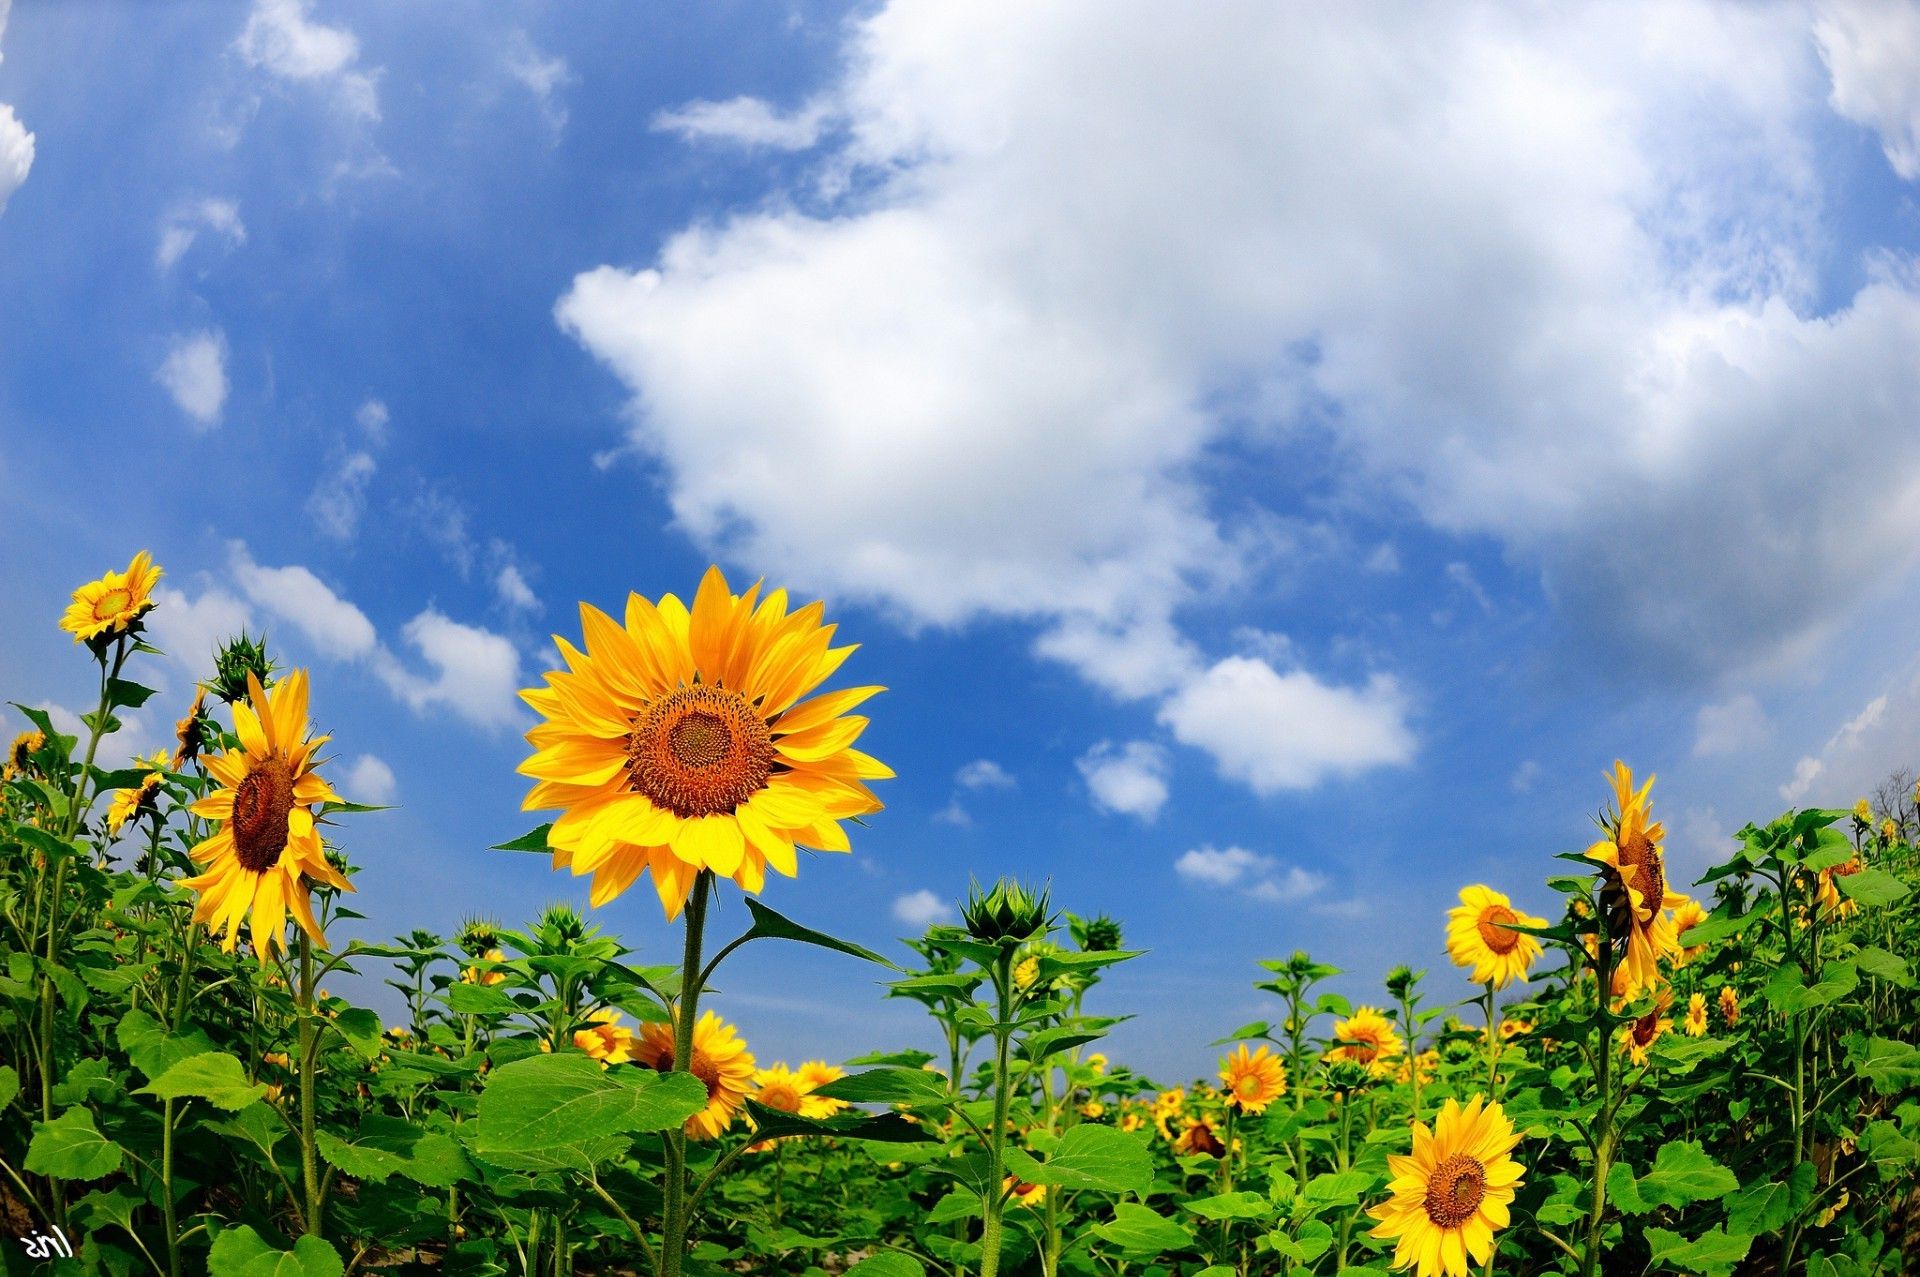 Sunny flowers under blue sky